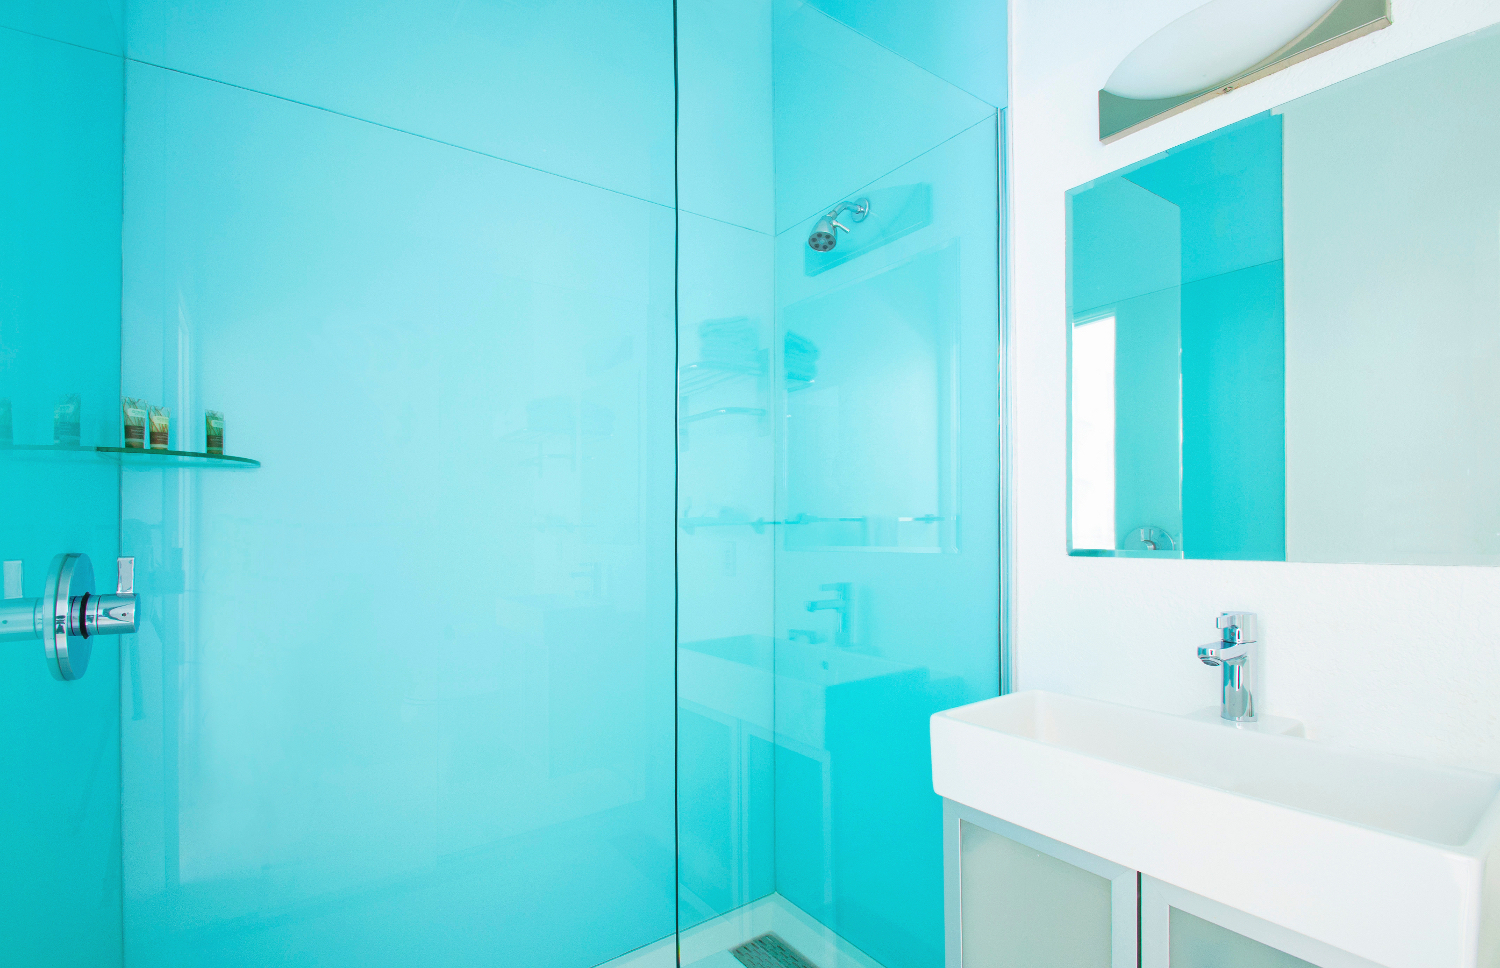 Poolside King Deluxe Room Alcazar Hotel-Bathroom sink and shower